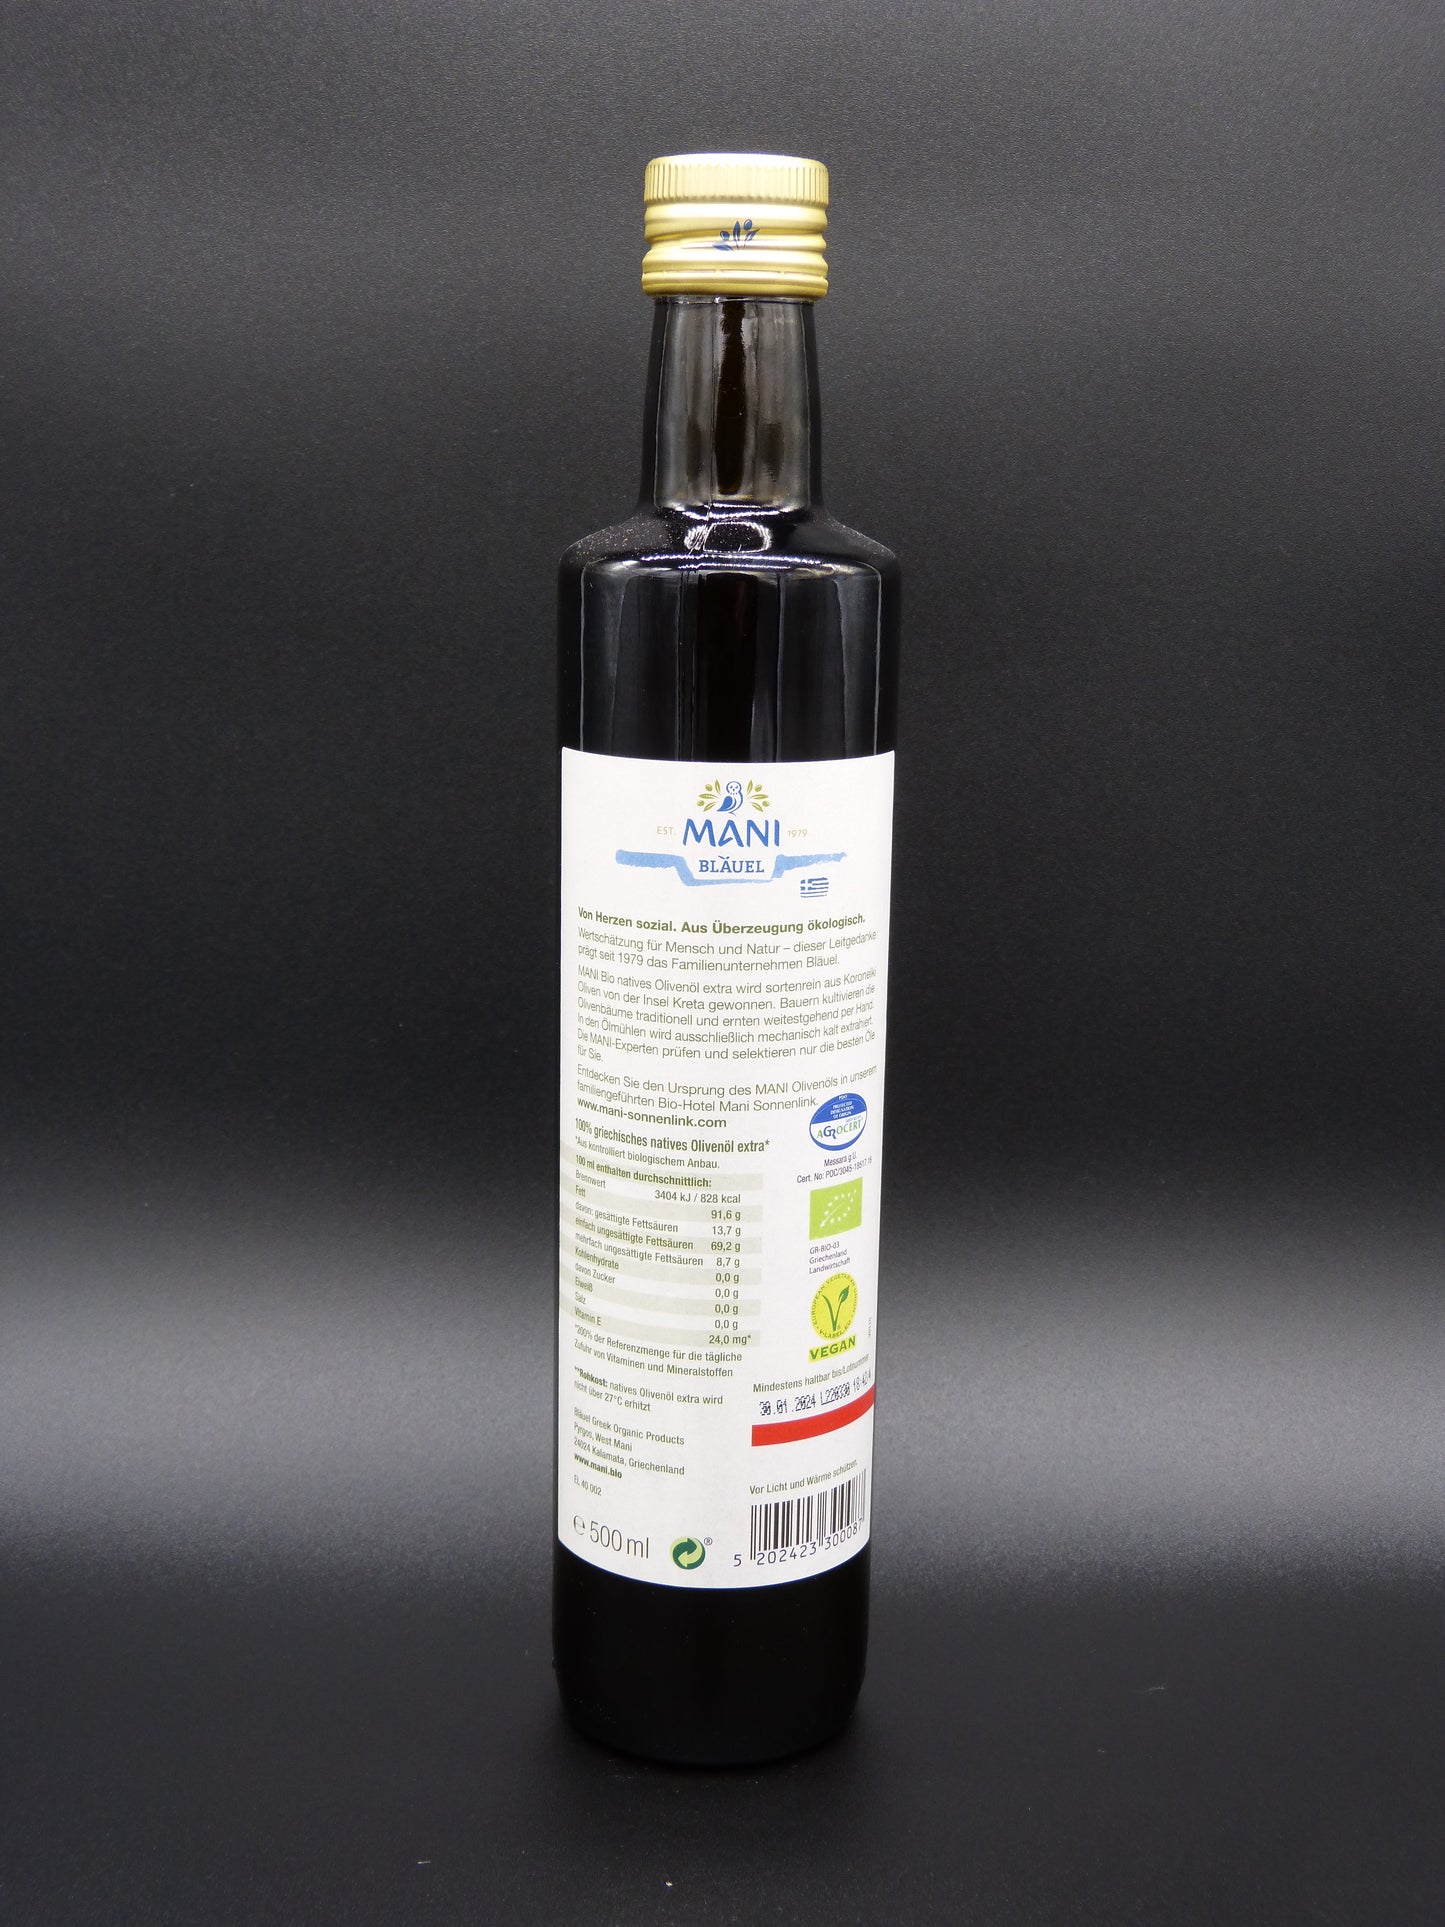 Olivenöl Kreta Messara